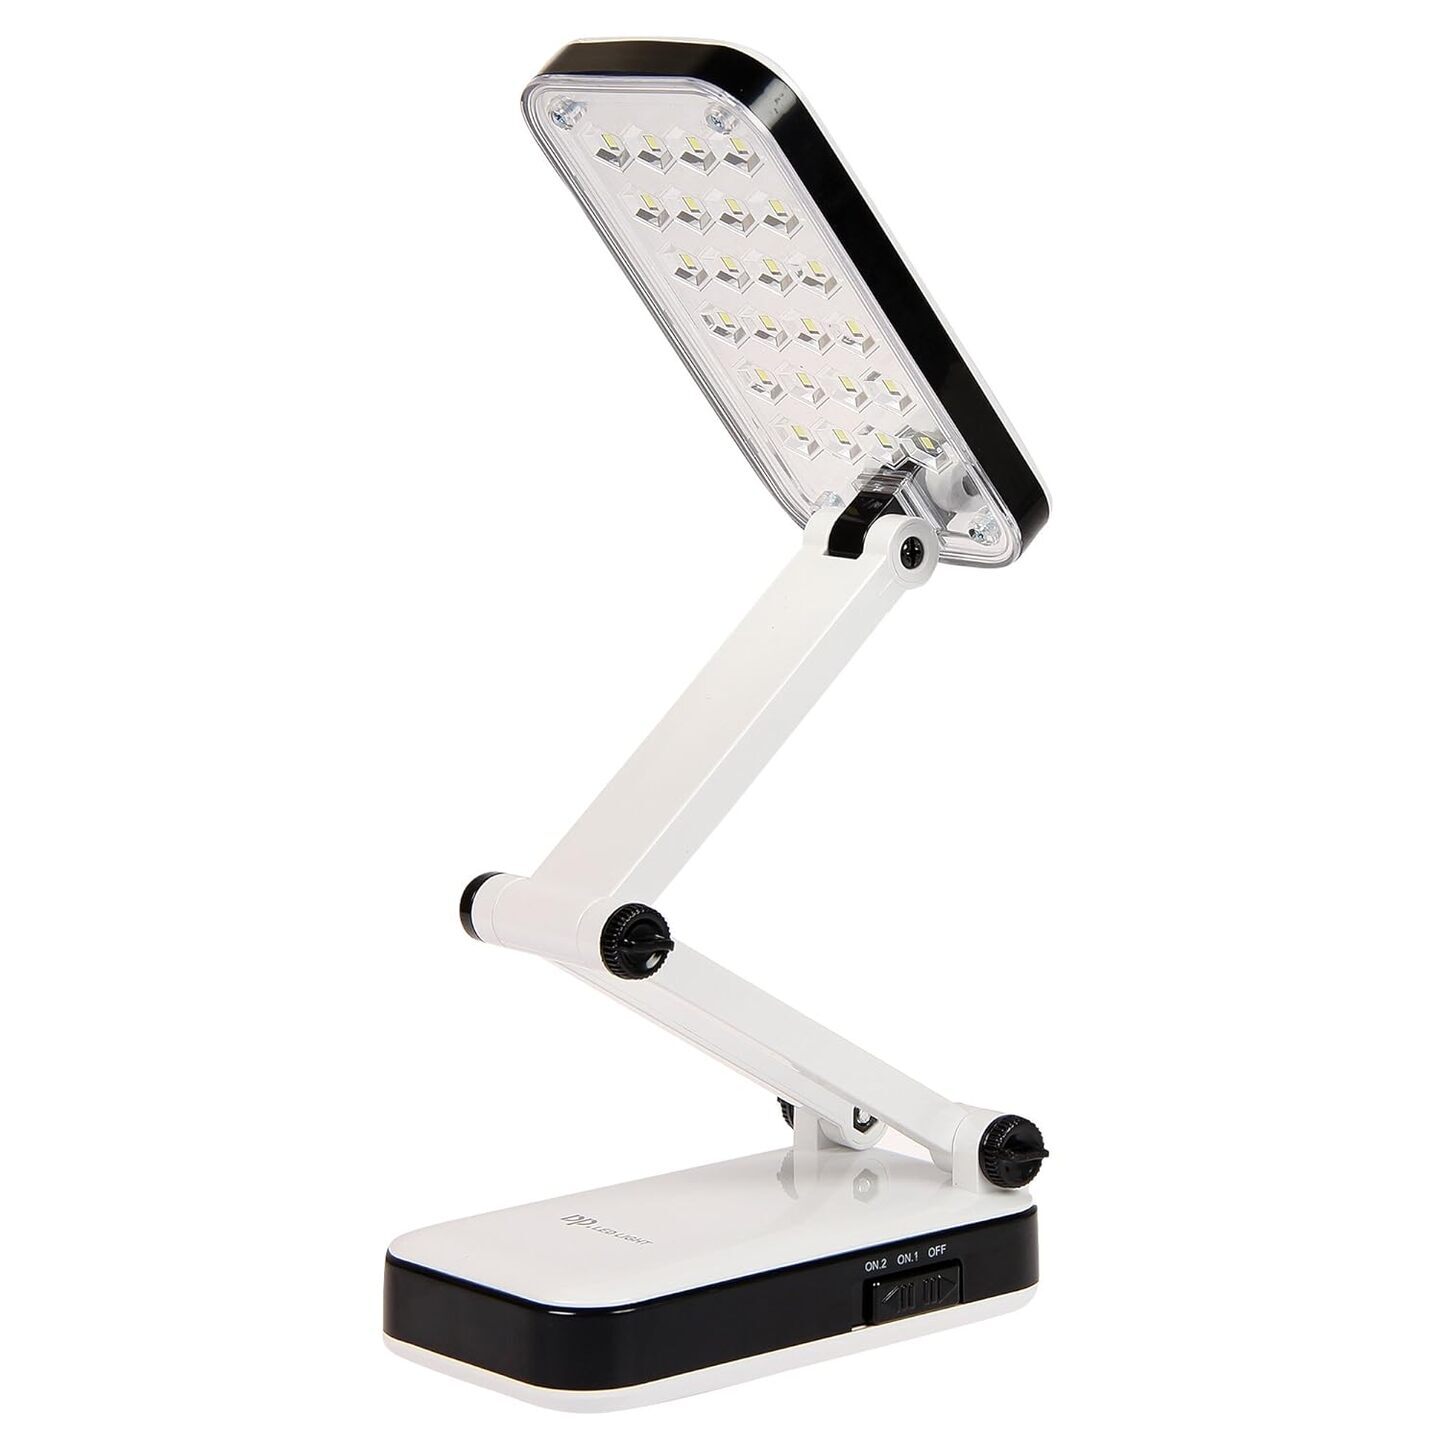 DP 666 800mAh Rechargeable LED Desk Lamp (White-Black)